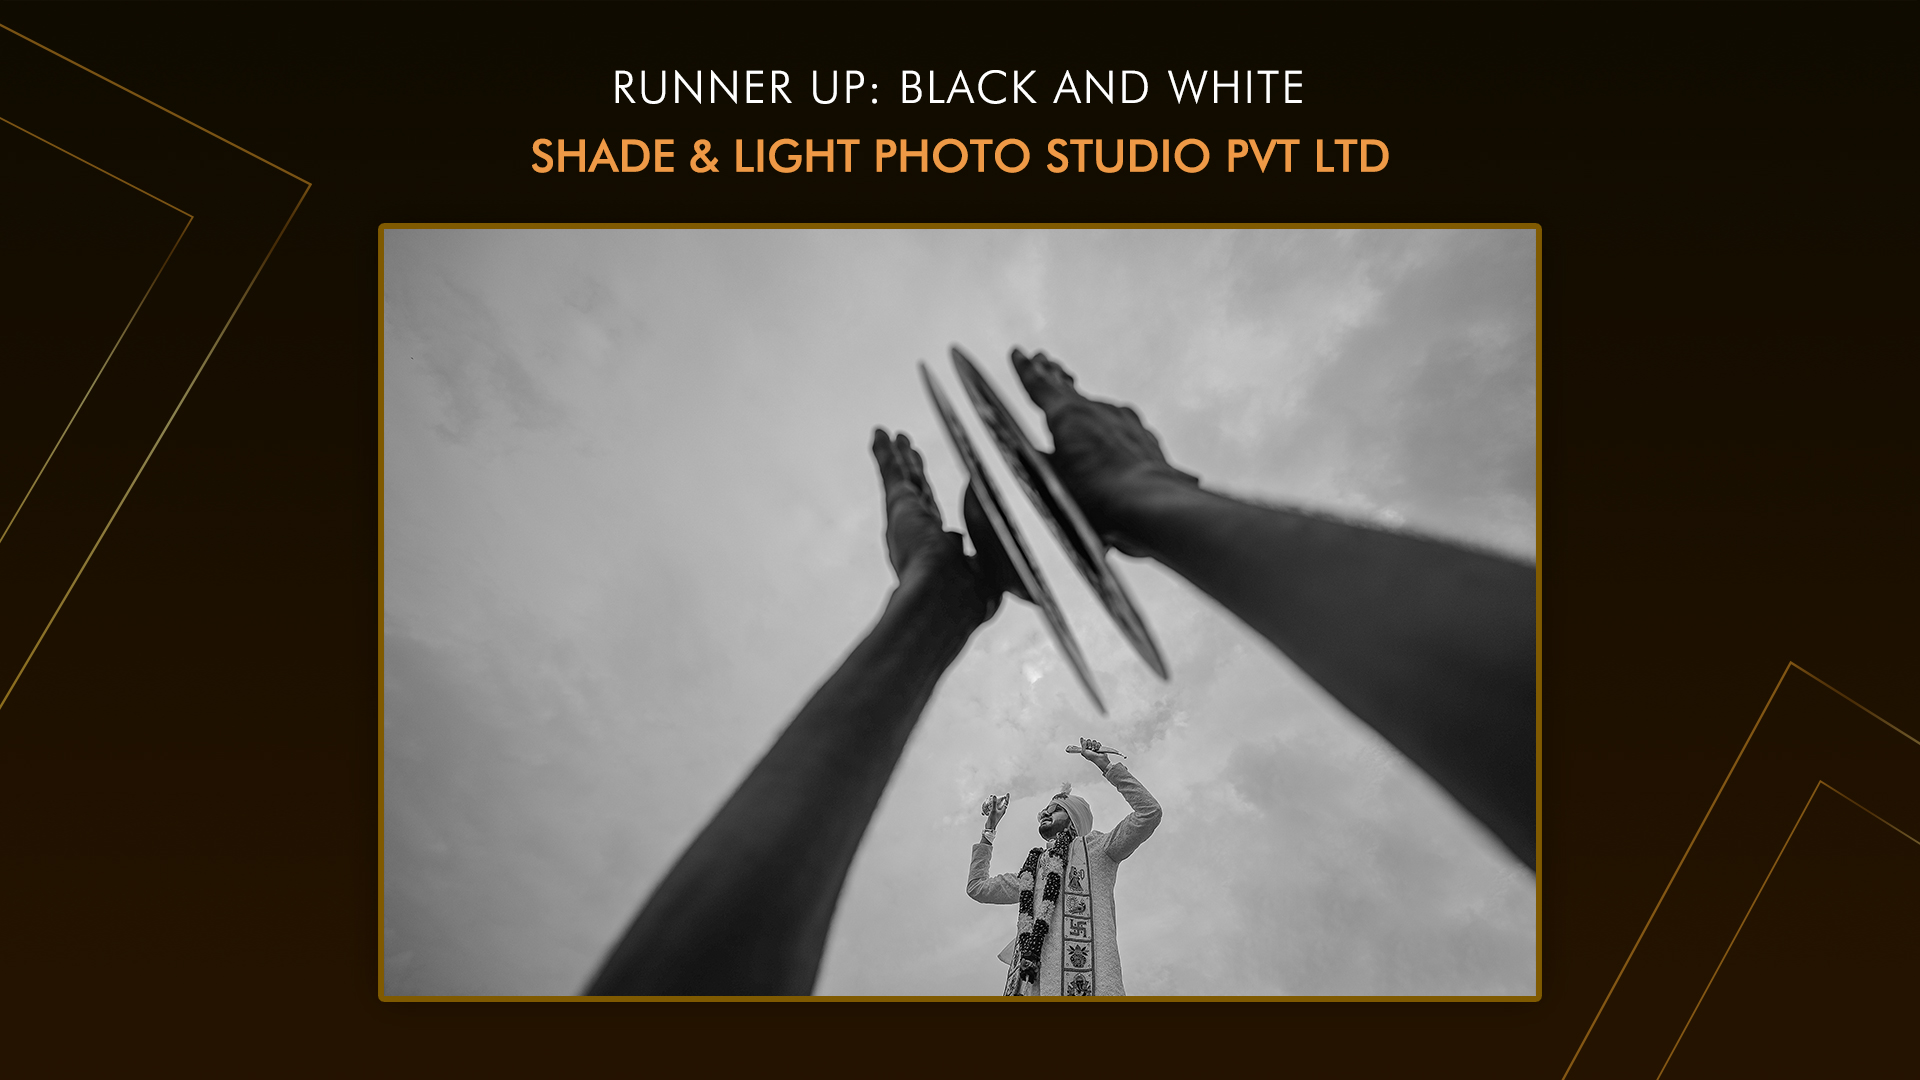 Shade & Light Photo Studio PVT LTD